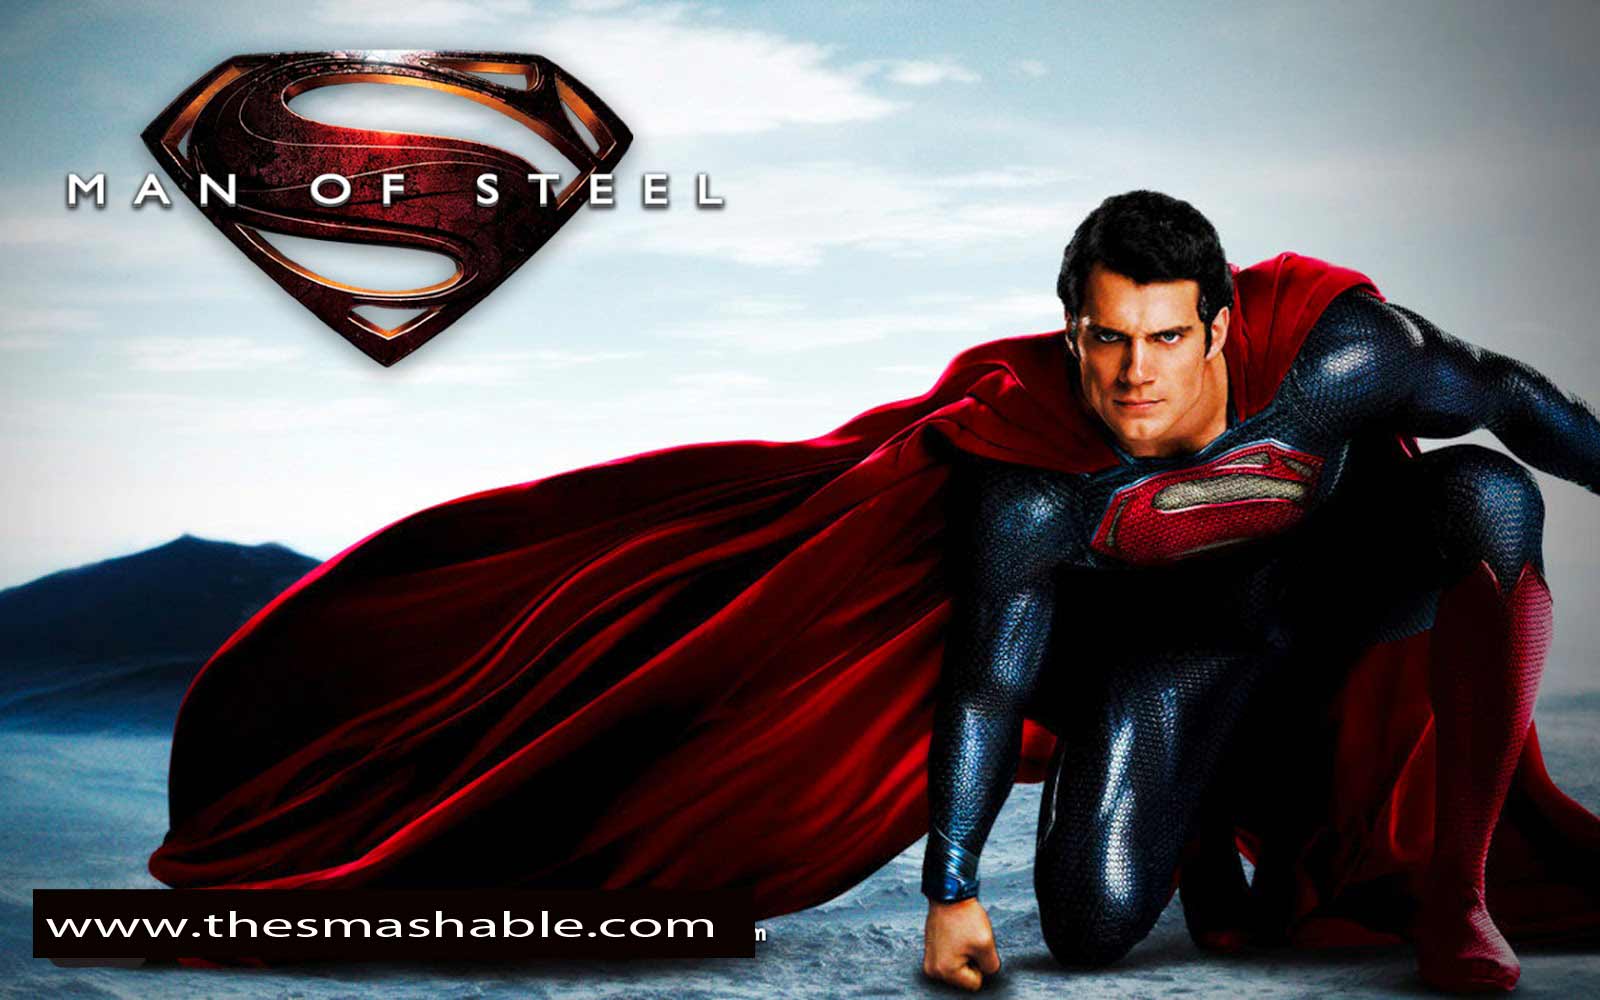 Man of Steel Wallpapers and Desktop Backgrounds | Man of Steel Movie